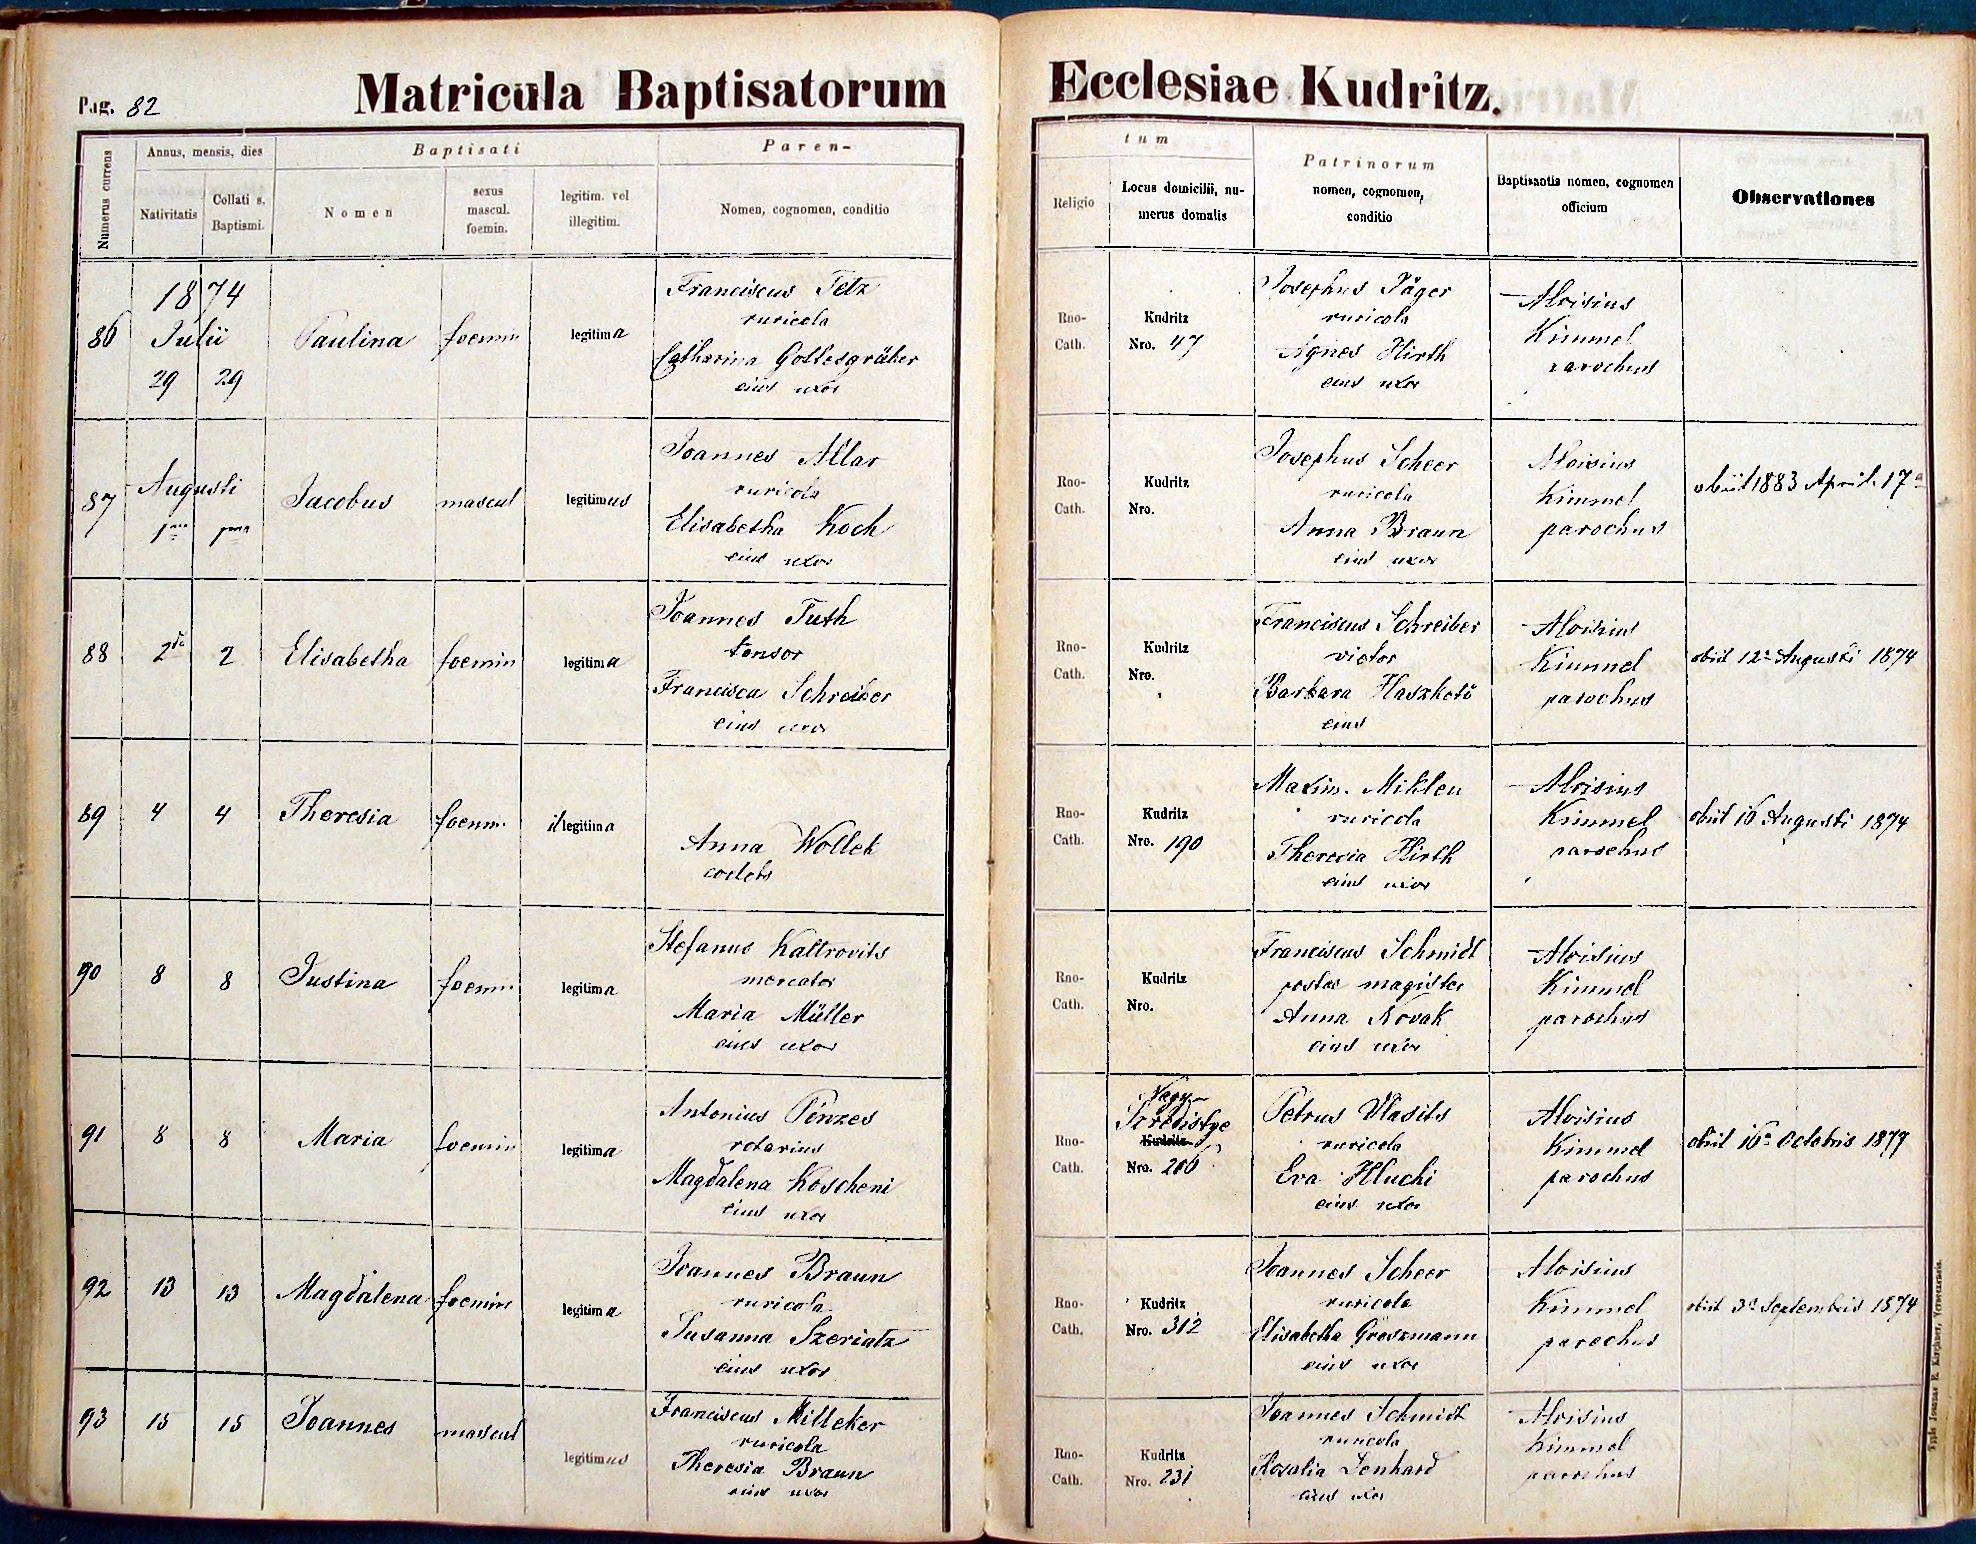 images/church_records/BIRTHS/1884-1899B/1889/082